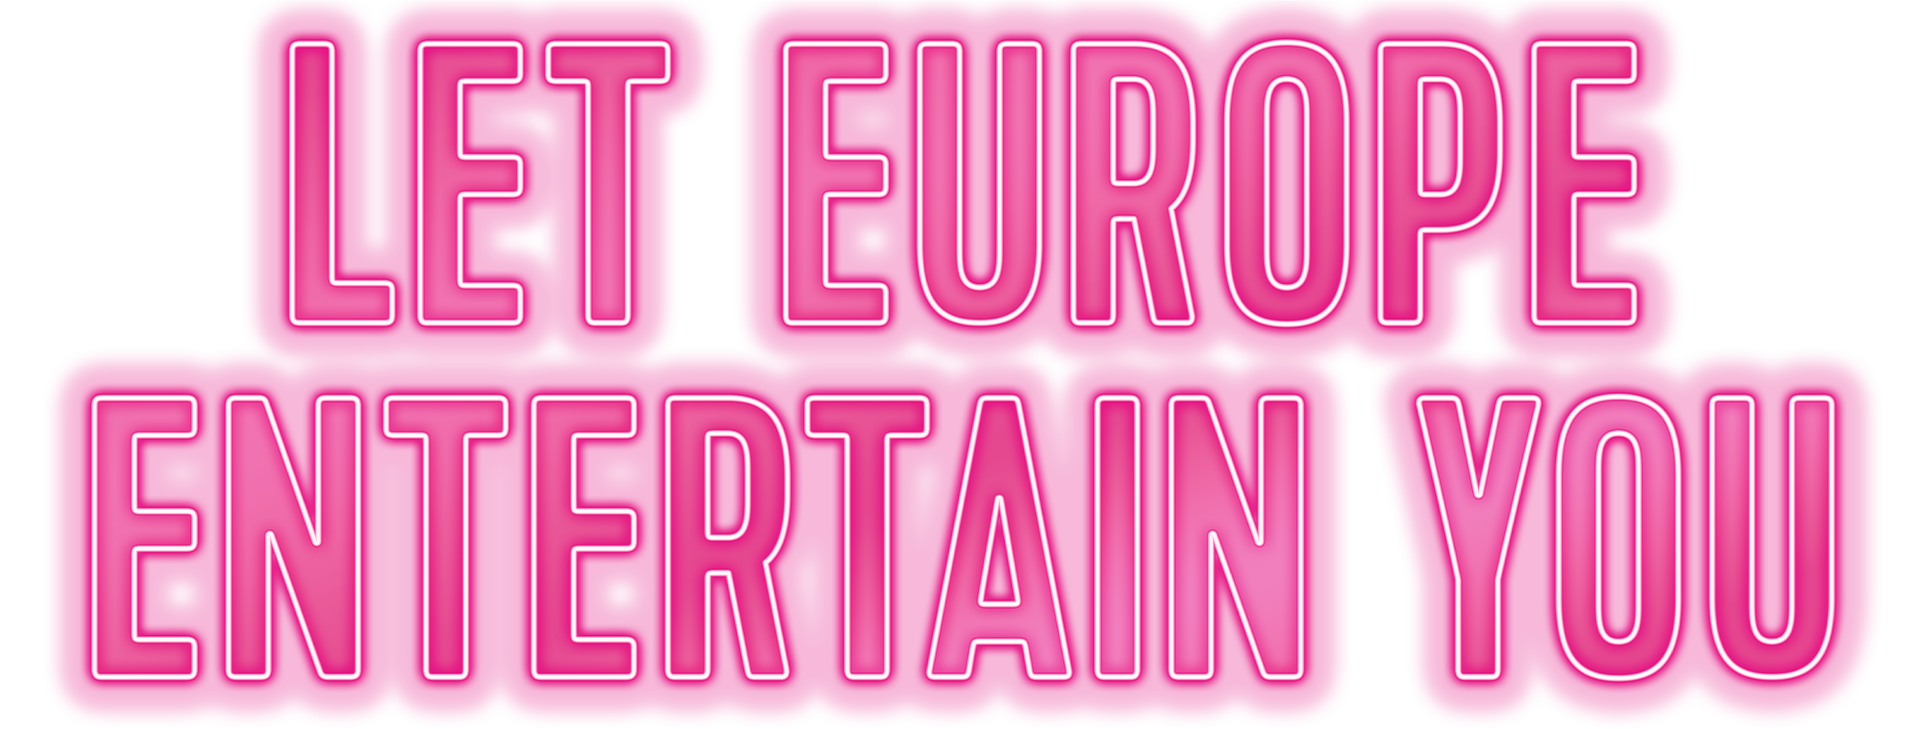 eurovision royal caribbean logo